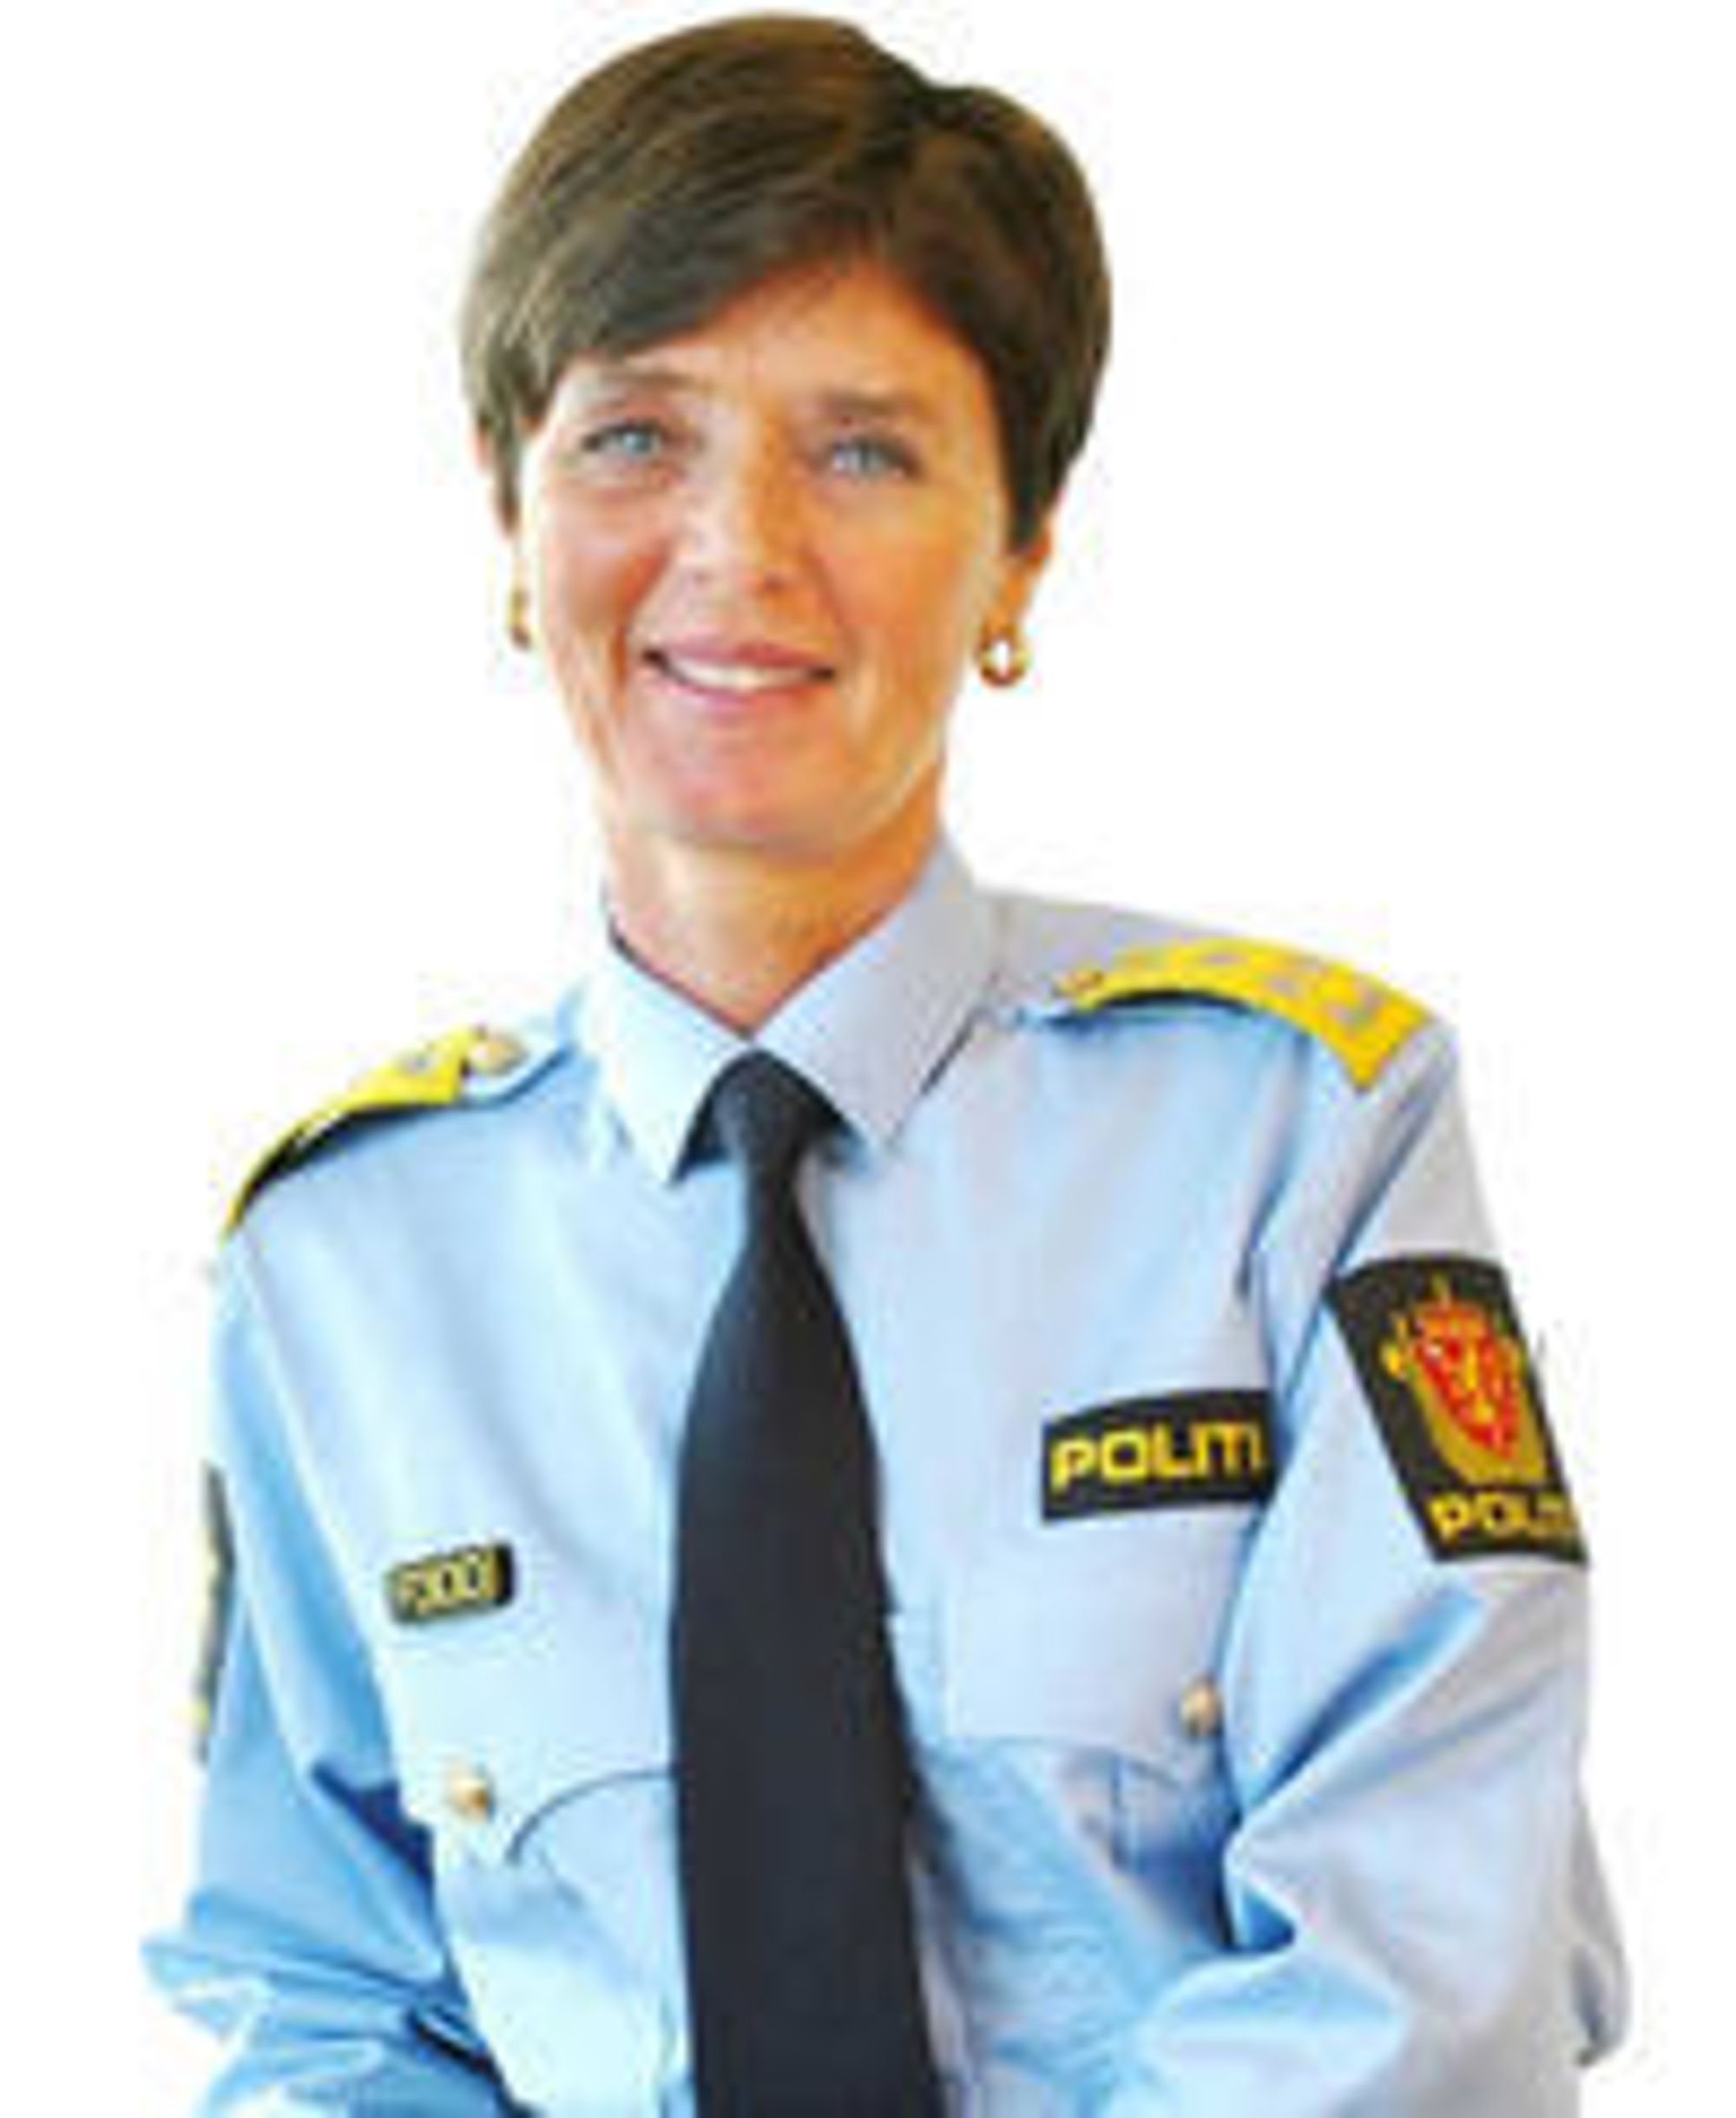 Politidirektør Ingelin Killengreen har søkt stillingen som departementsråd i FAD.